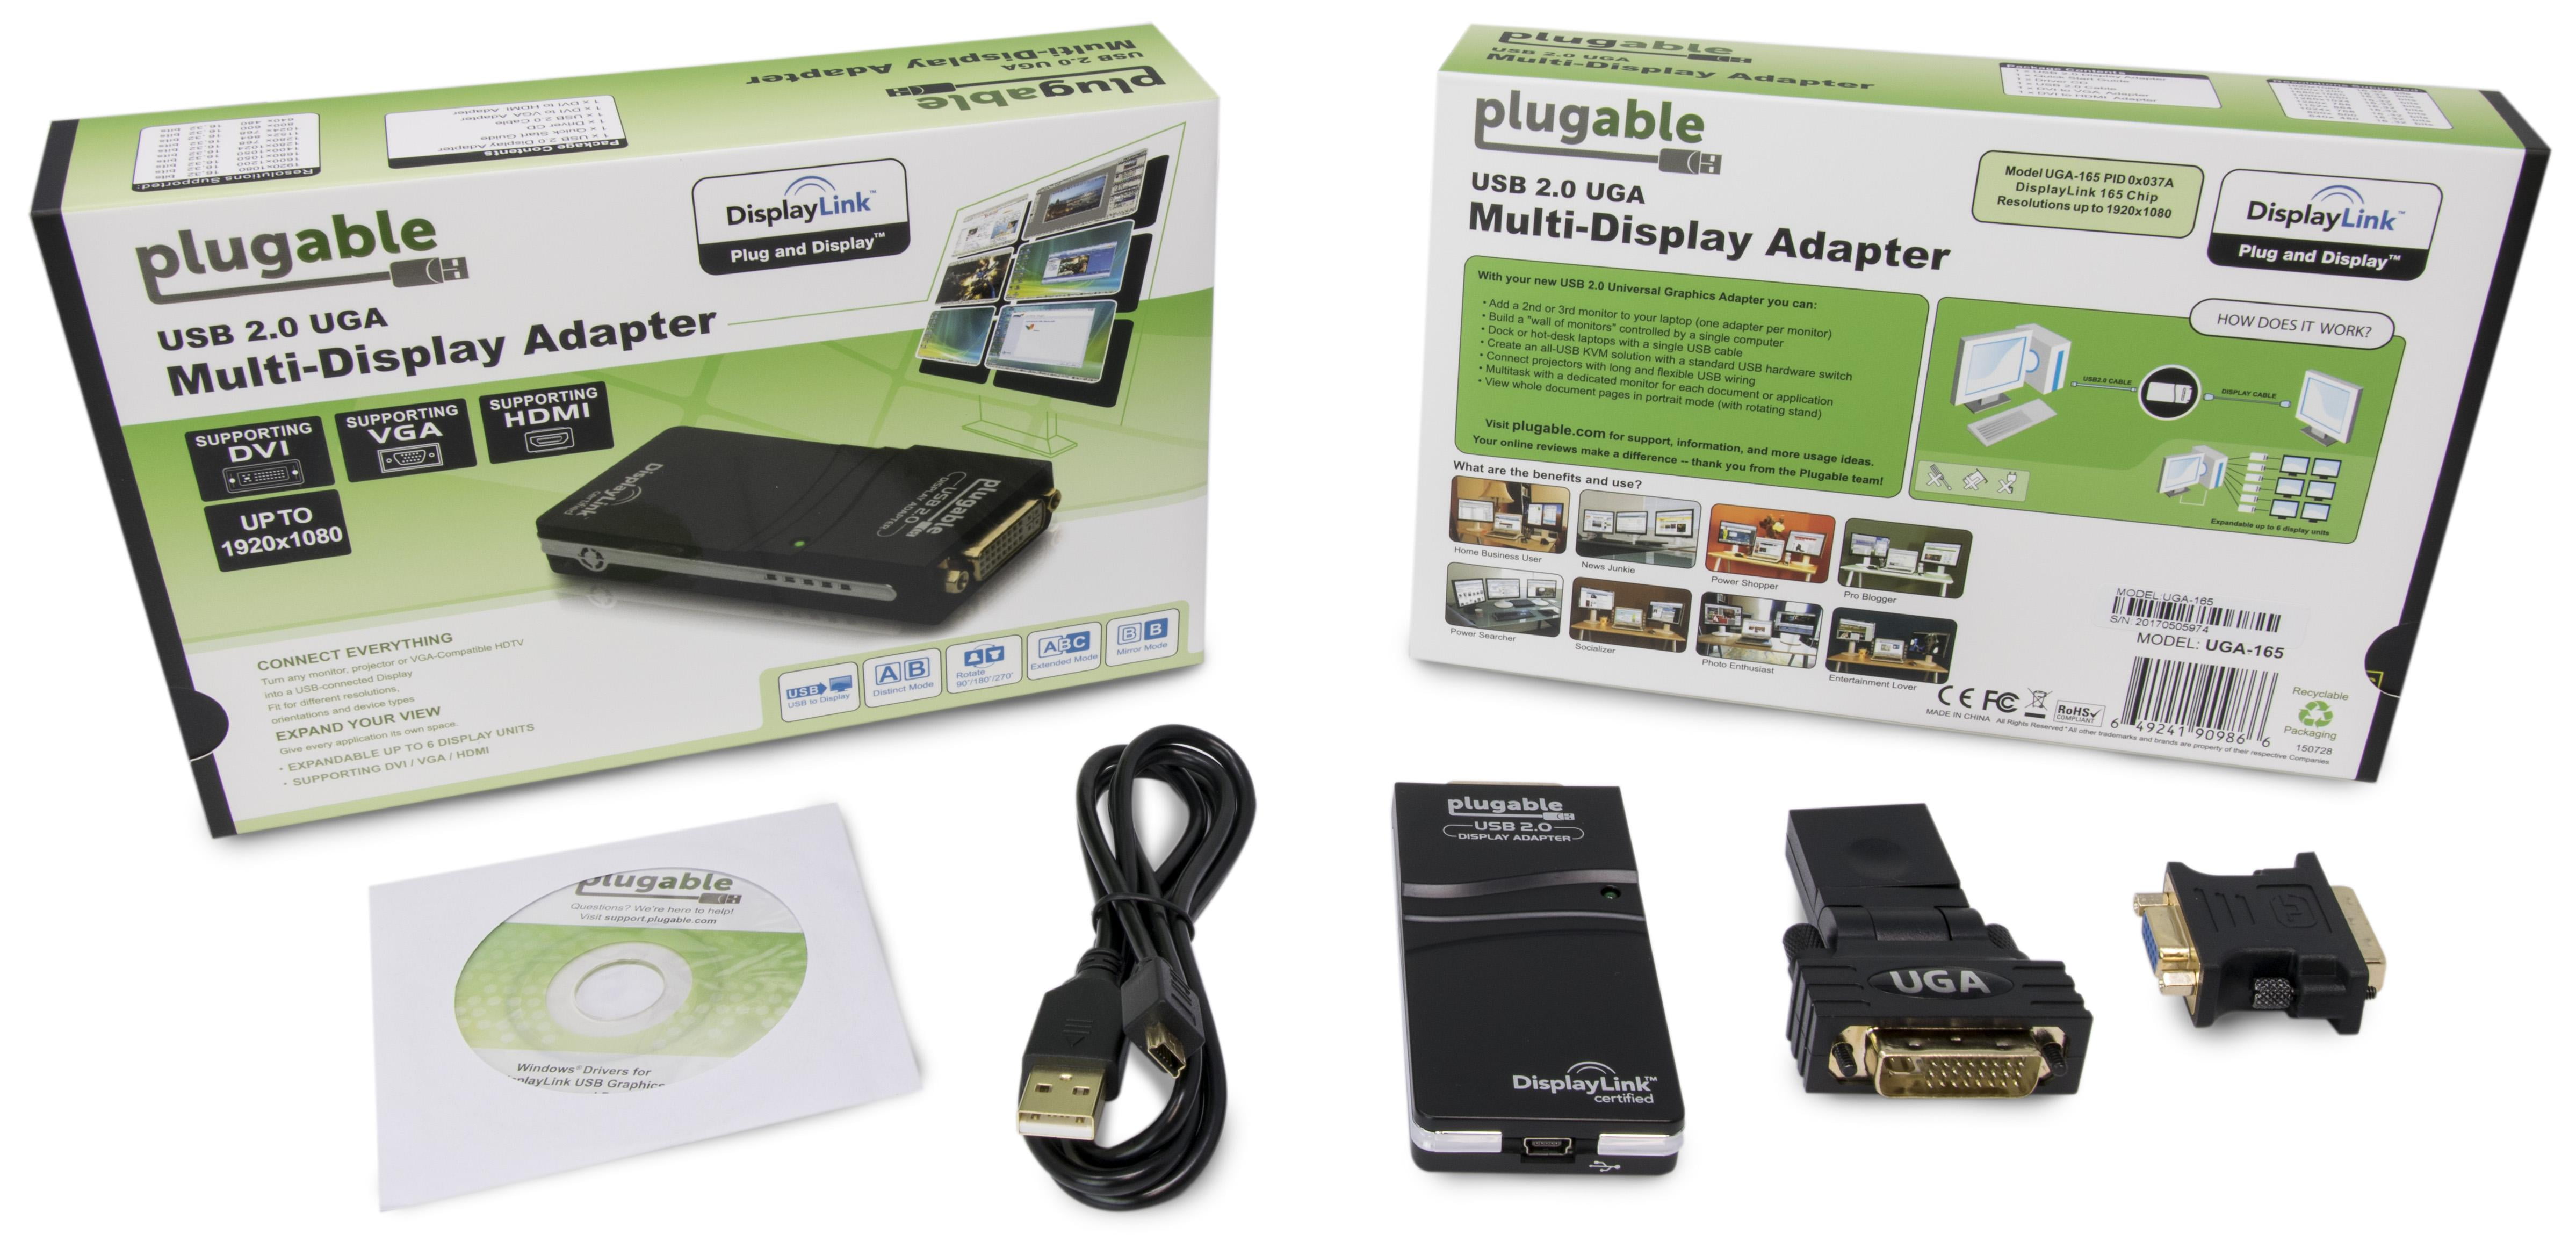 Plugable USB 2.0 to DVI/VGA/HDMI Video Graphics Adapter for 